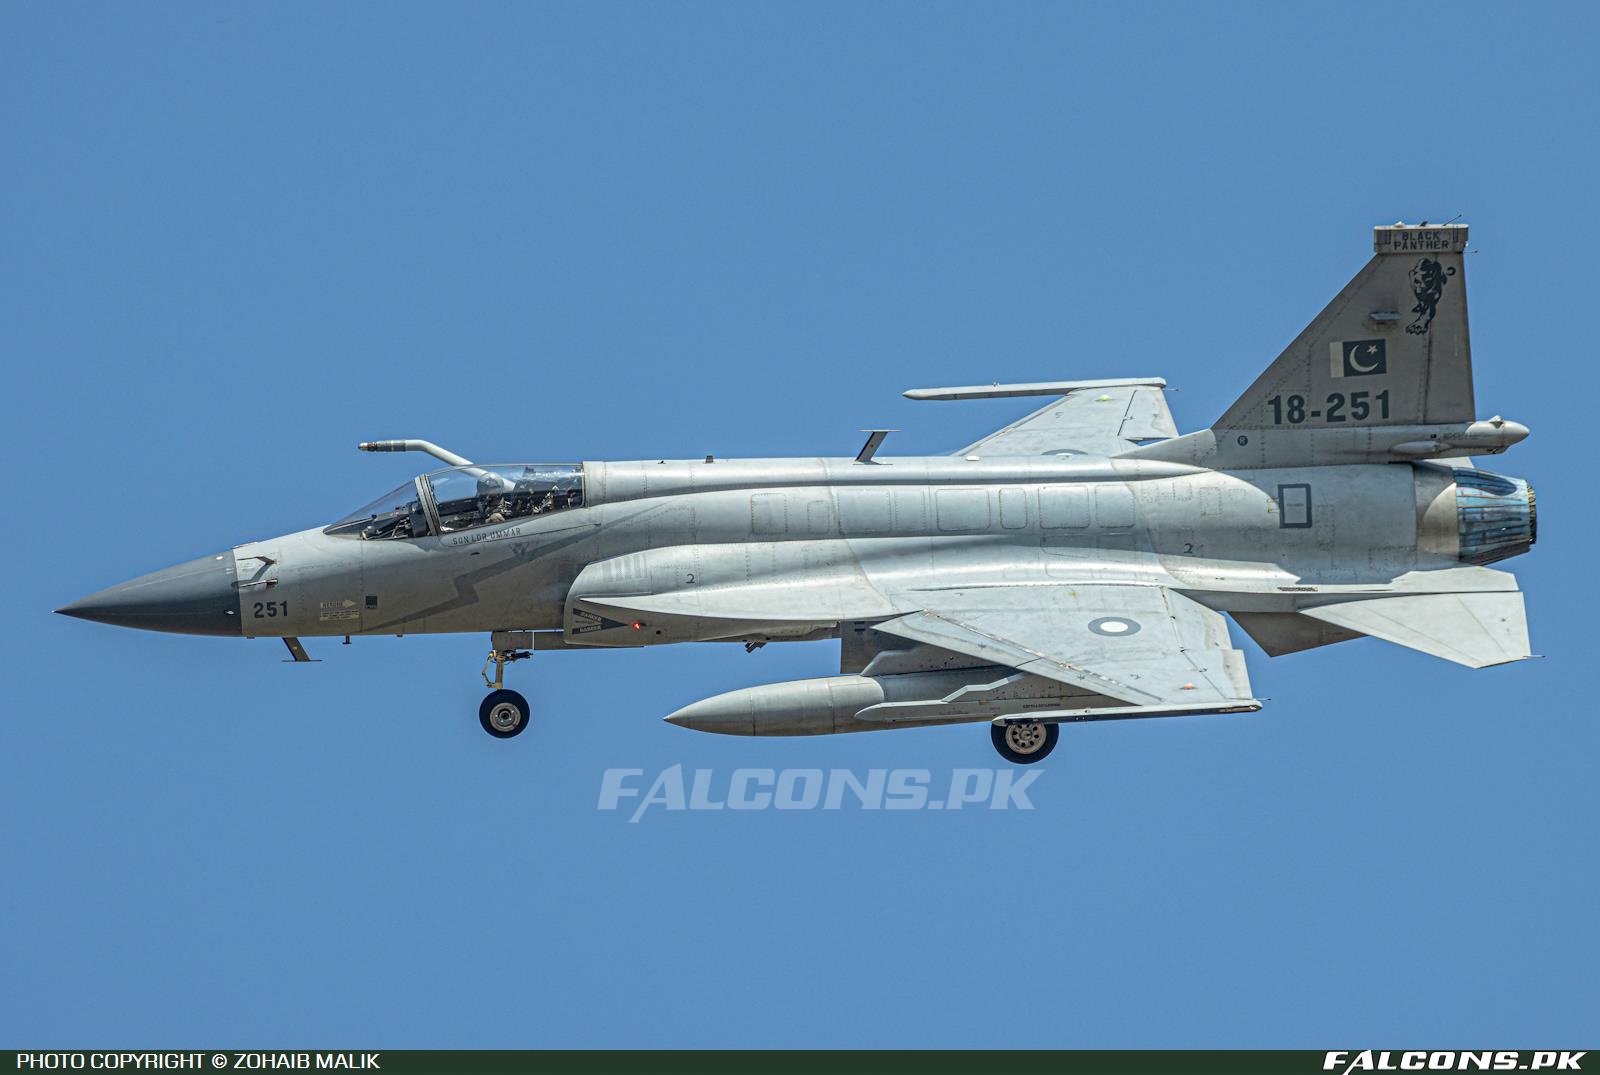 Pakistan Air Force (PAF) JF-17 Thunder Block 2, Reg: 18-251 (Photo by Zohaib Malik)